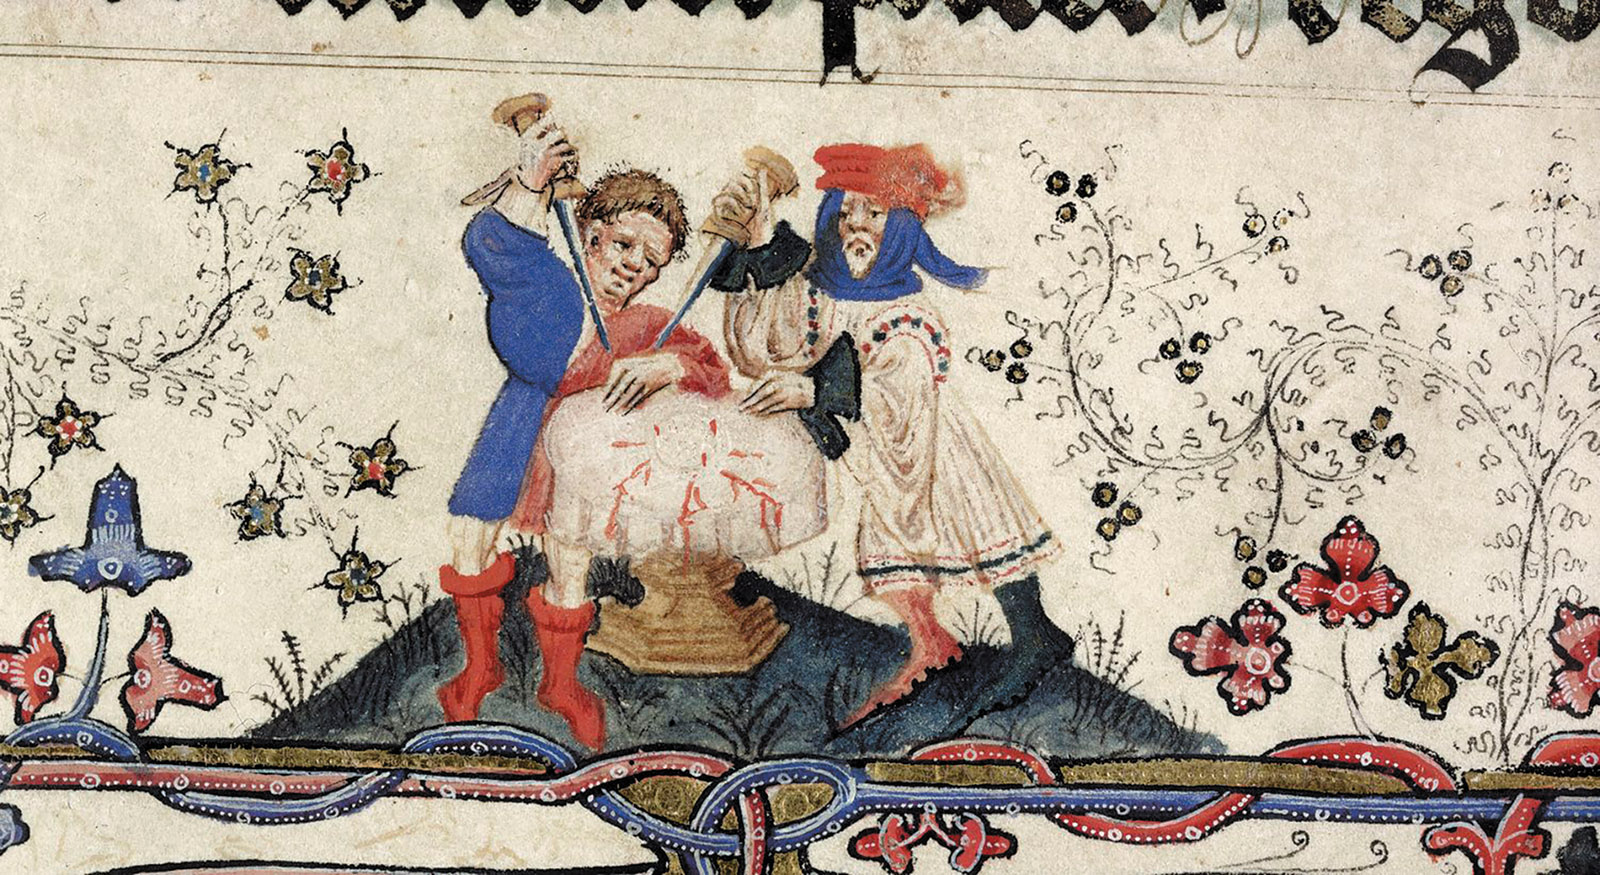 Men desecrating the host, circa 1400